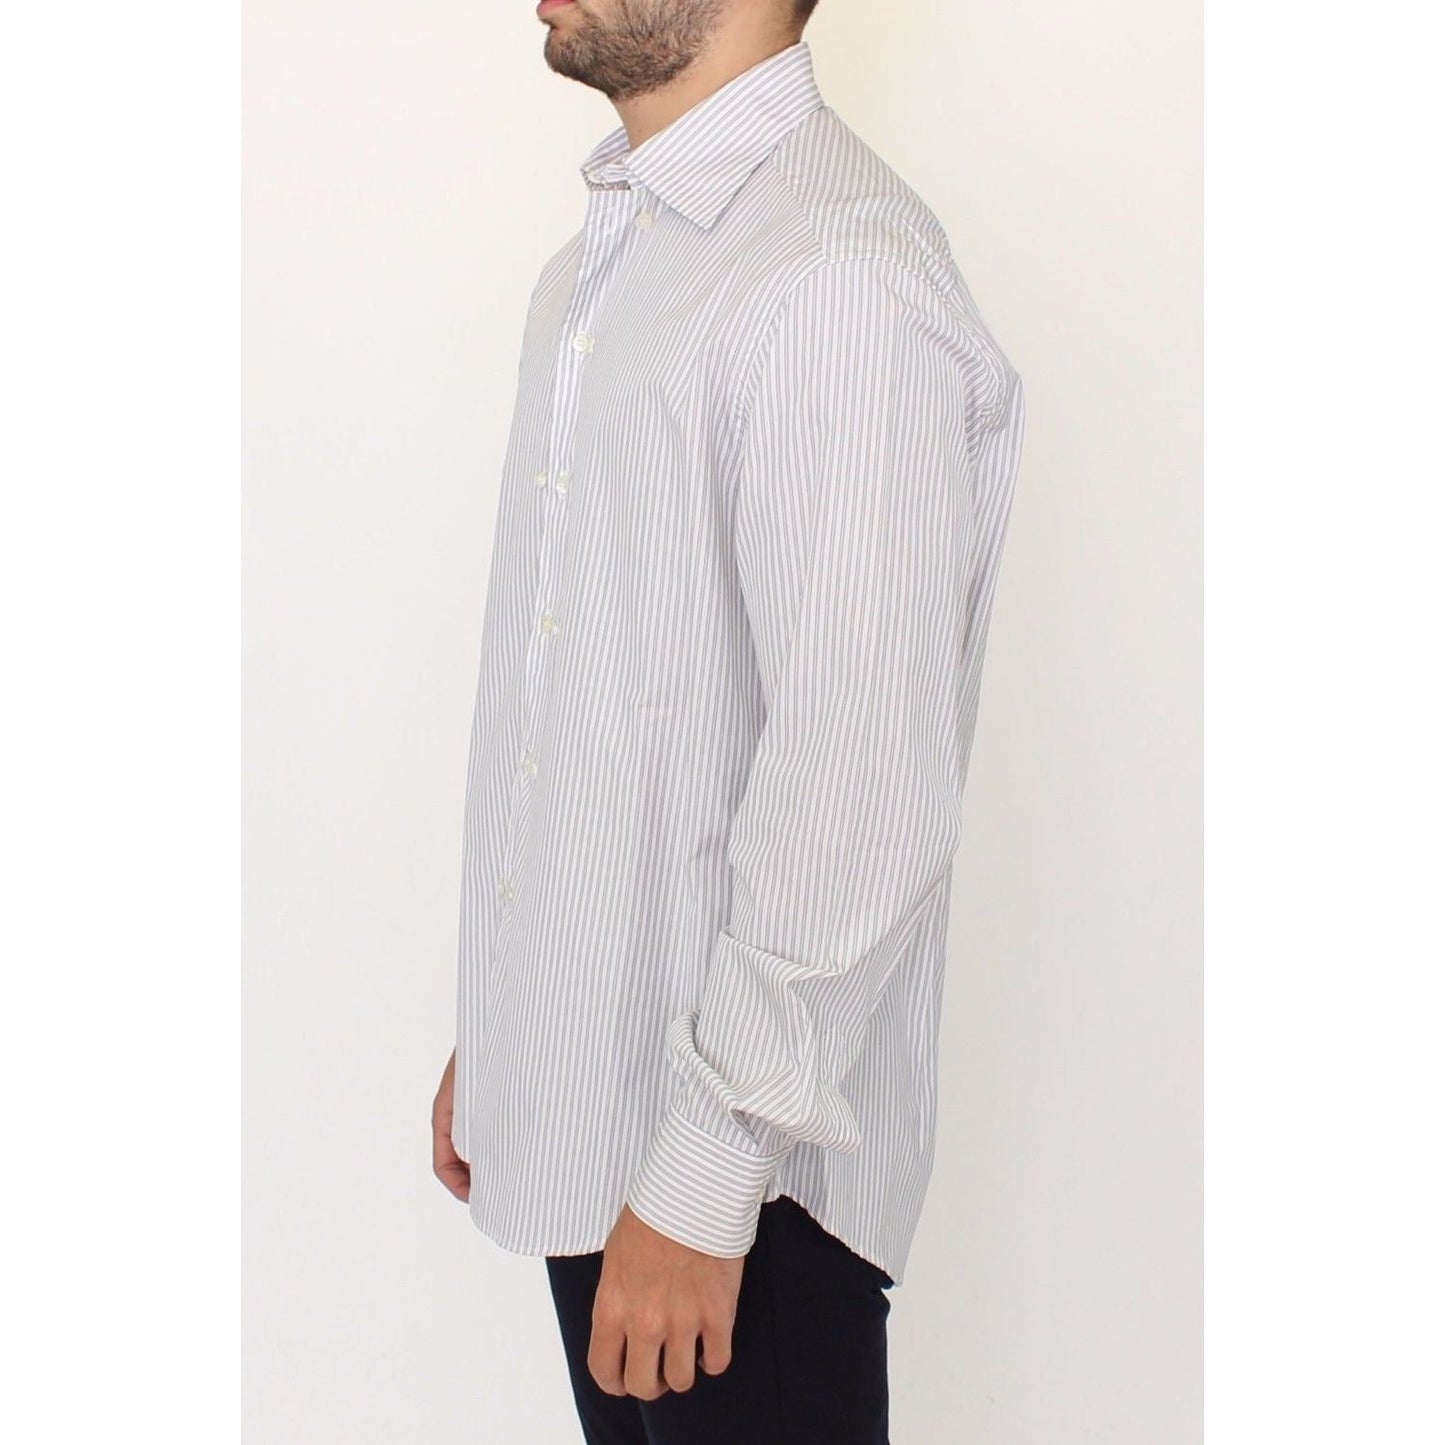 Ermanno Scervino Elegant White and Gray Striped Cotton Shirt white-gray-striped-regular-fit-casual-shirt